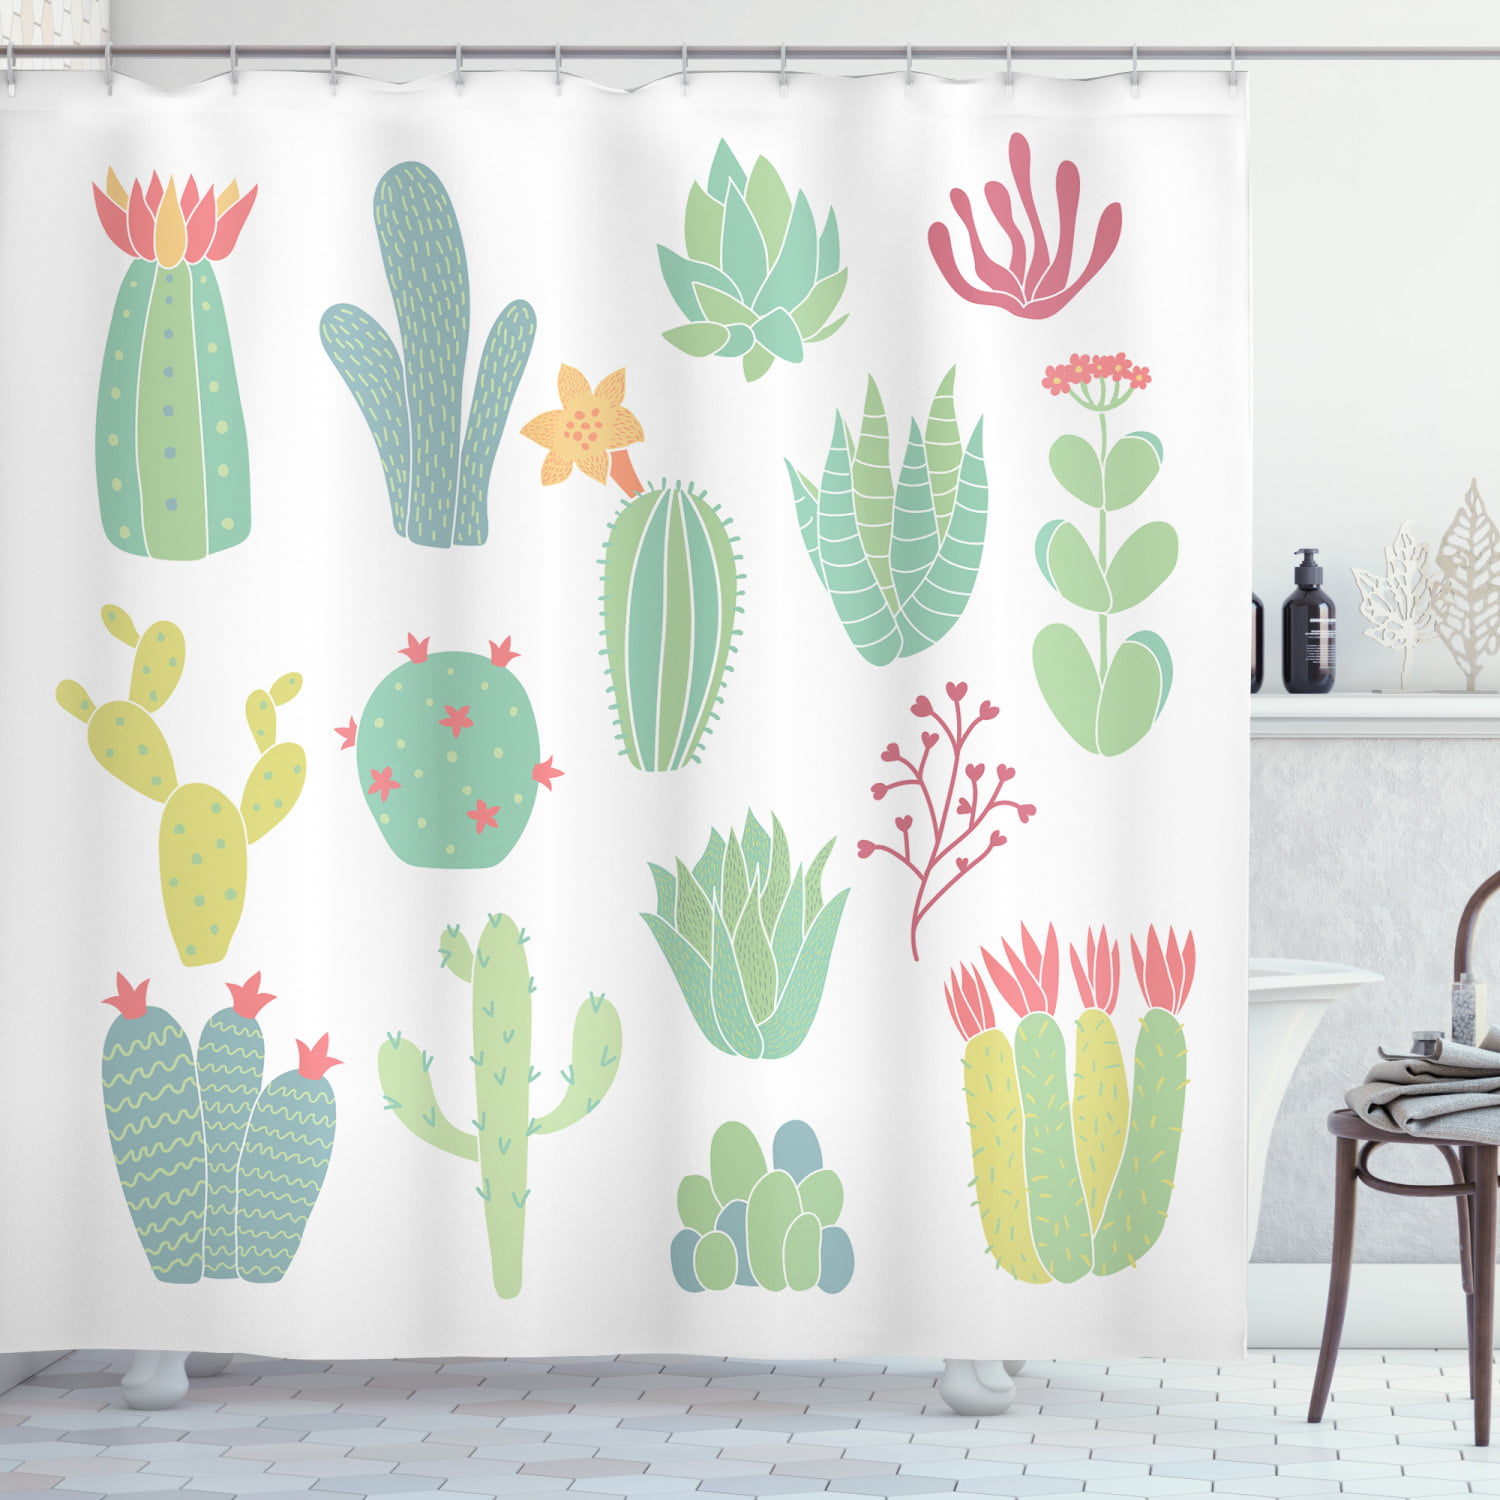 Cactus Flower Saguaro Fruit Waterproof Bathroom Fabric Shower Curtain 71inches 